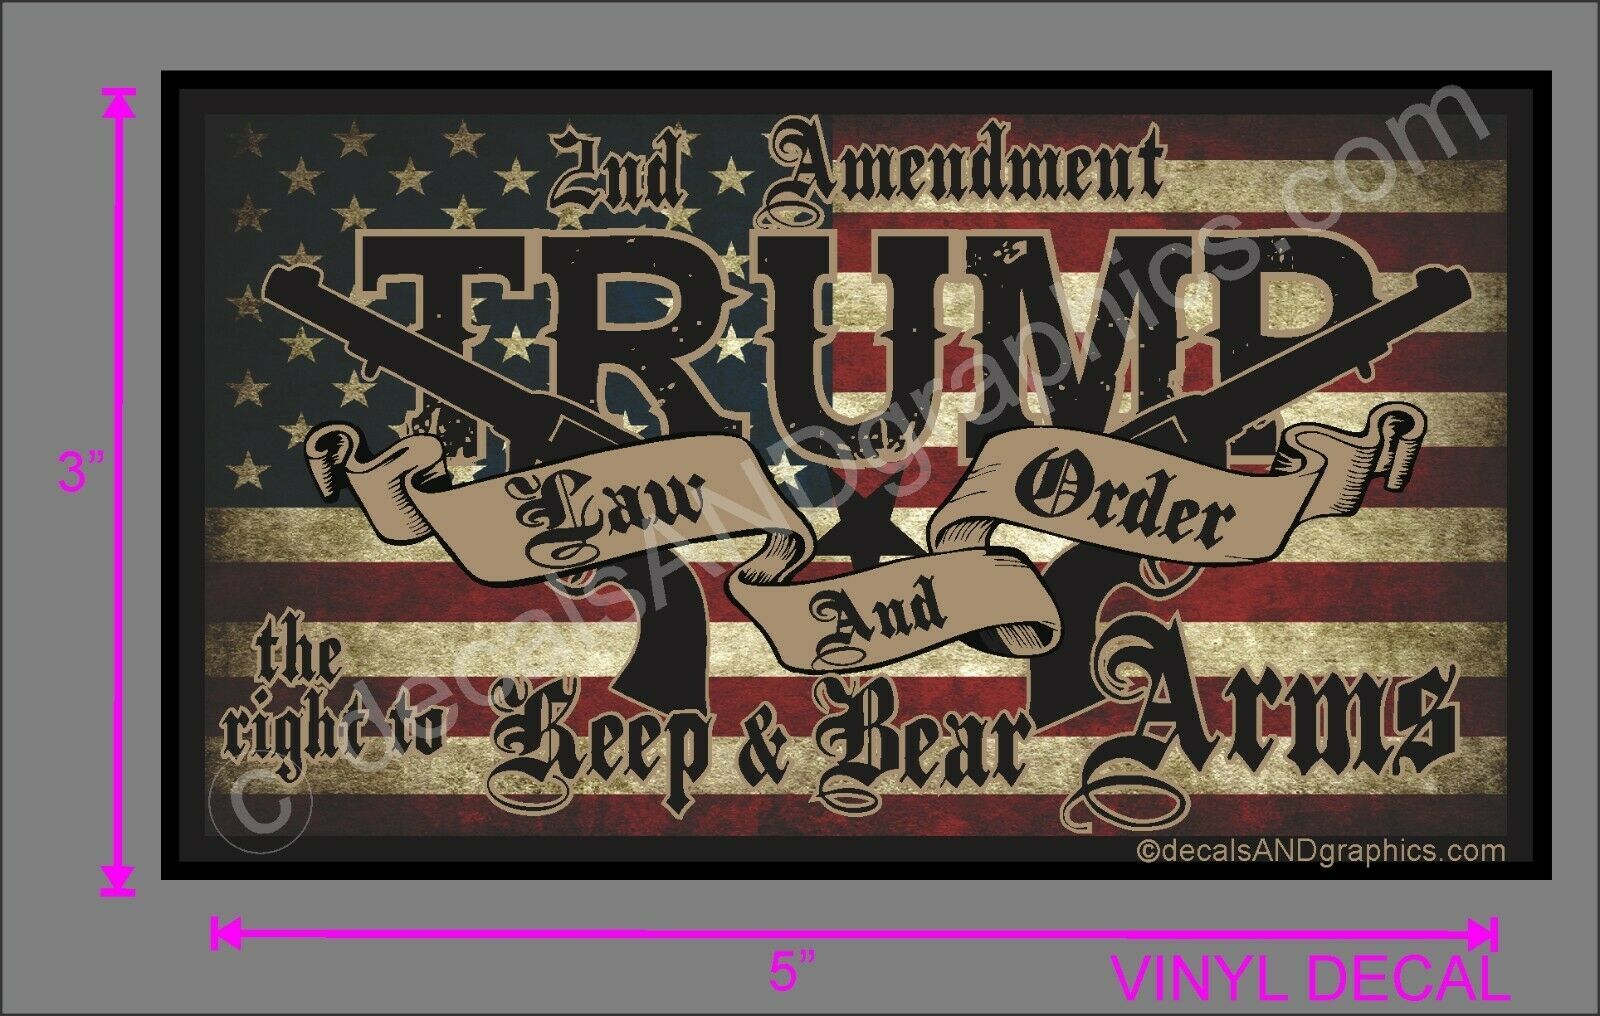 Trump Law & Order 2nd Amendment Guns American Flag 2020 Decal Bumper Sticker